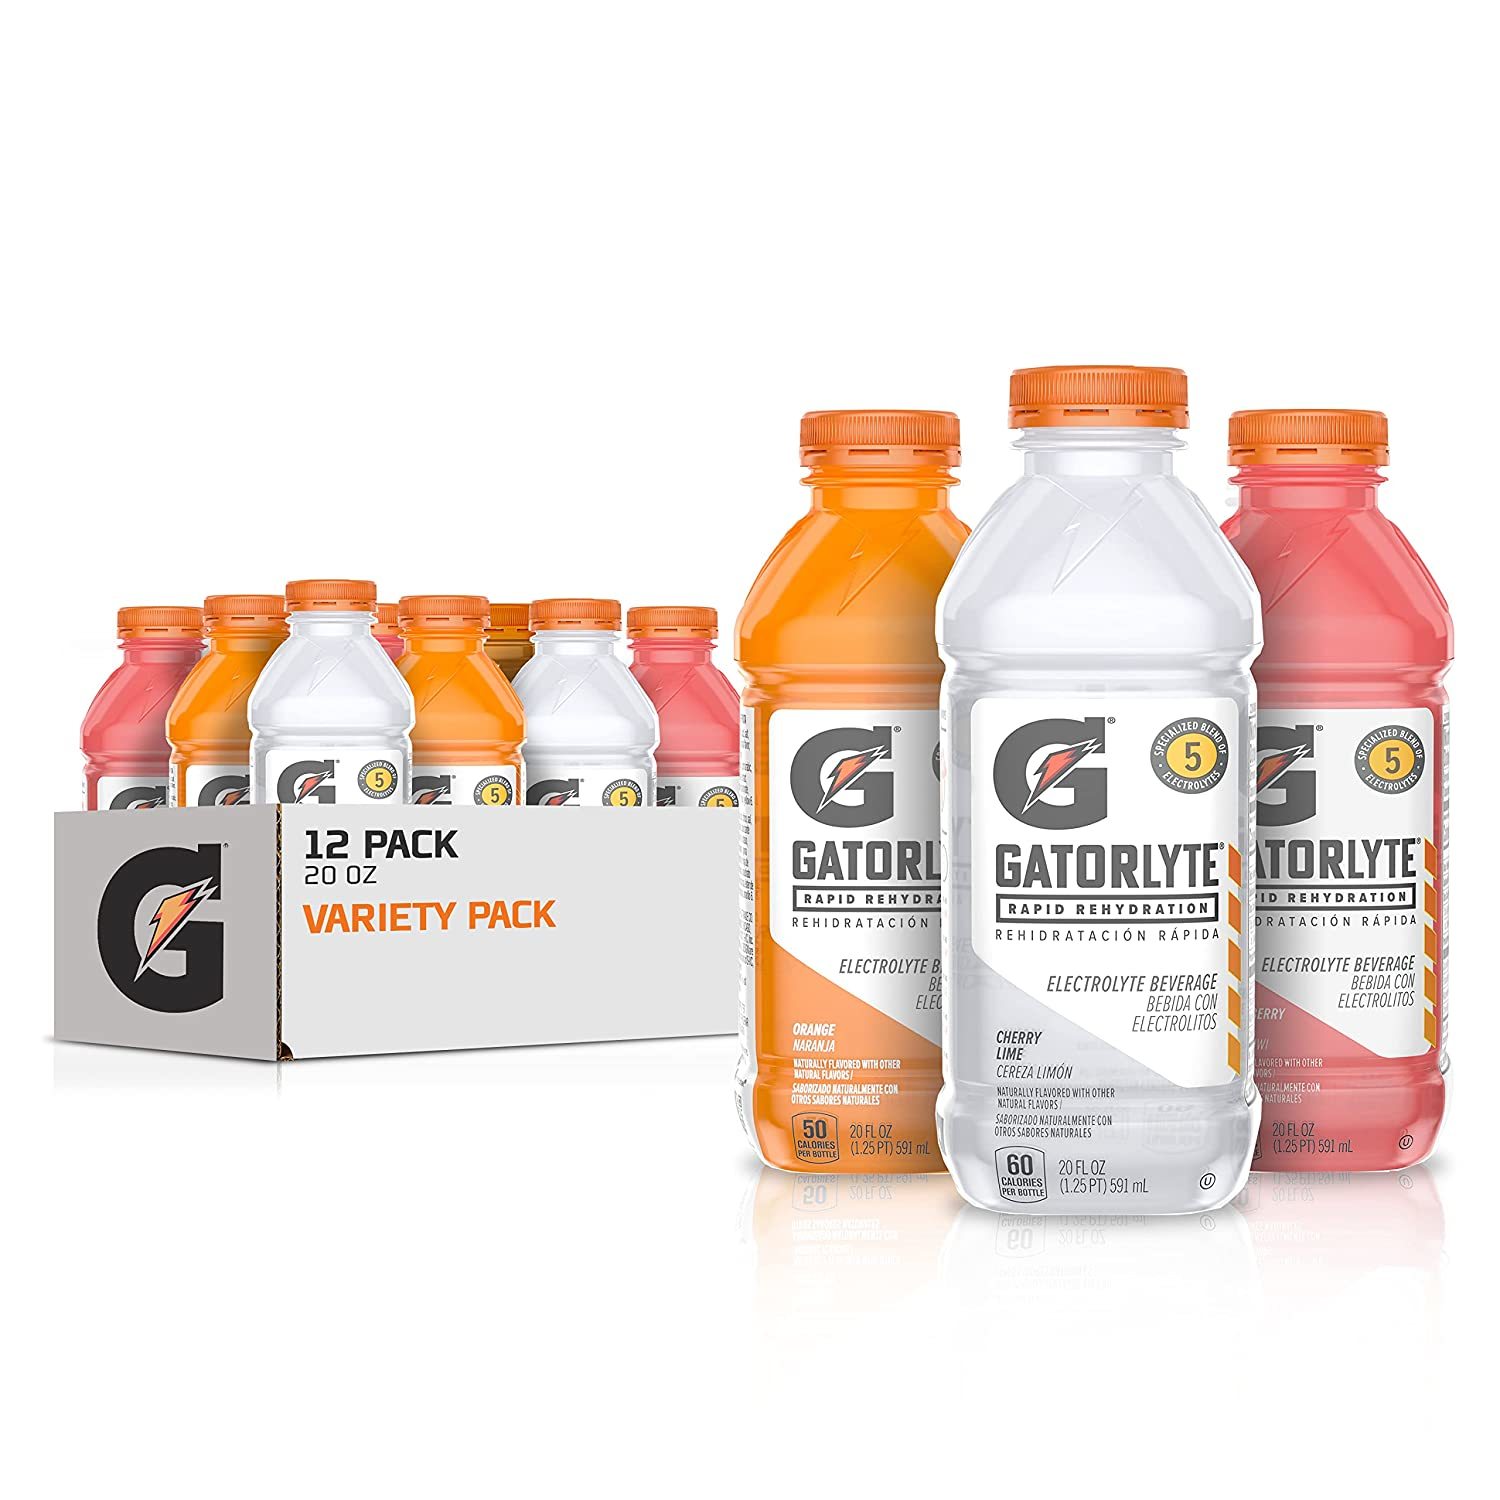 Gatorlyte Rapid Rehydration Beverage, 3 Flavor Variety Pack, 20 Fl Oz Pack of 12 - $44.99